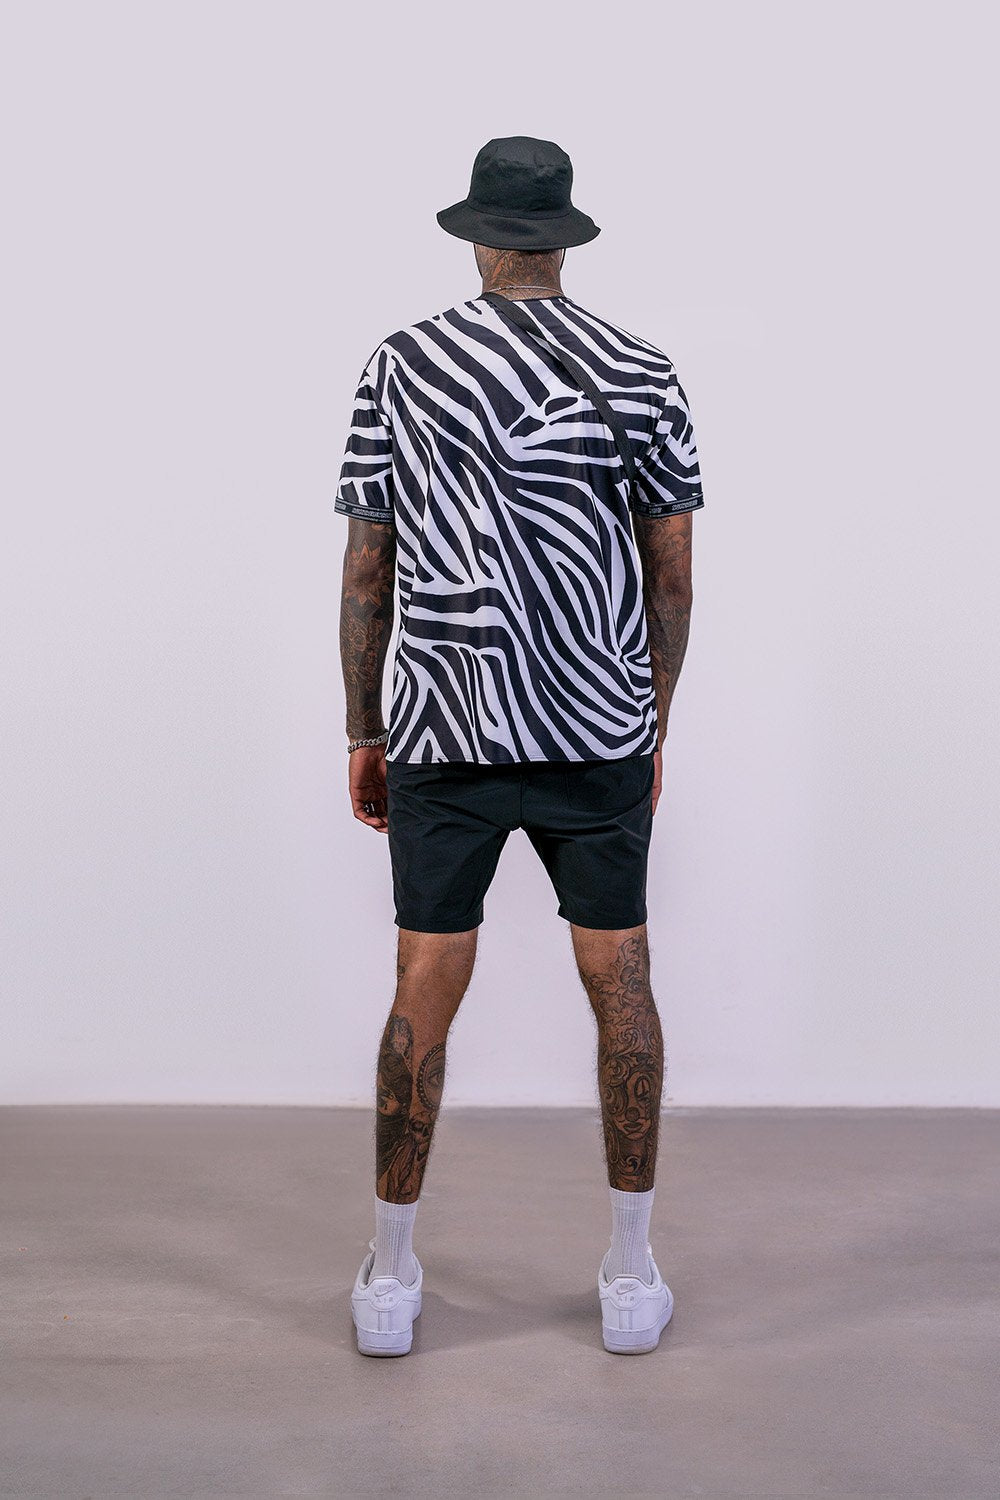 zebra-back.jpg